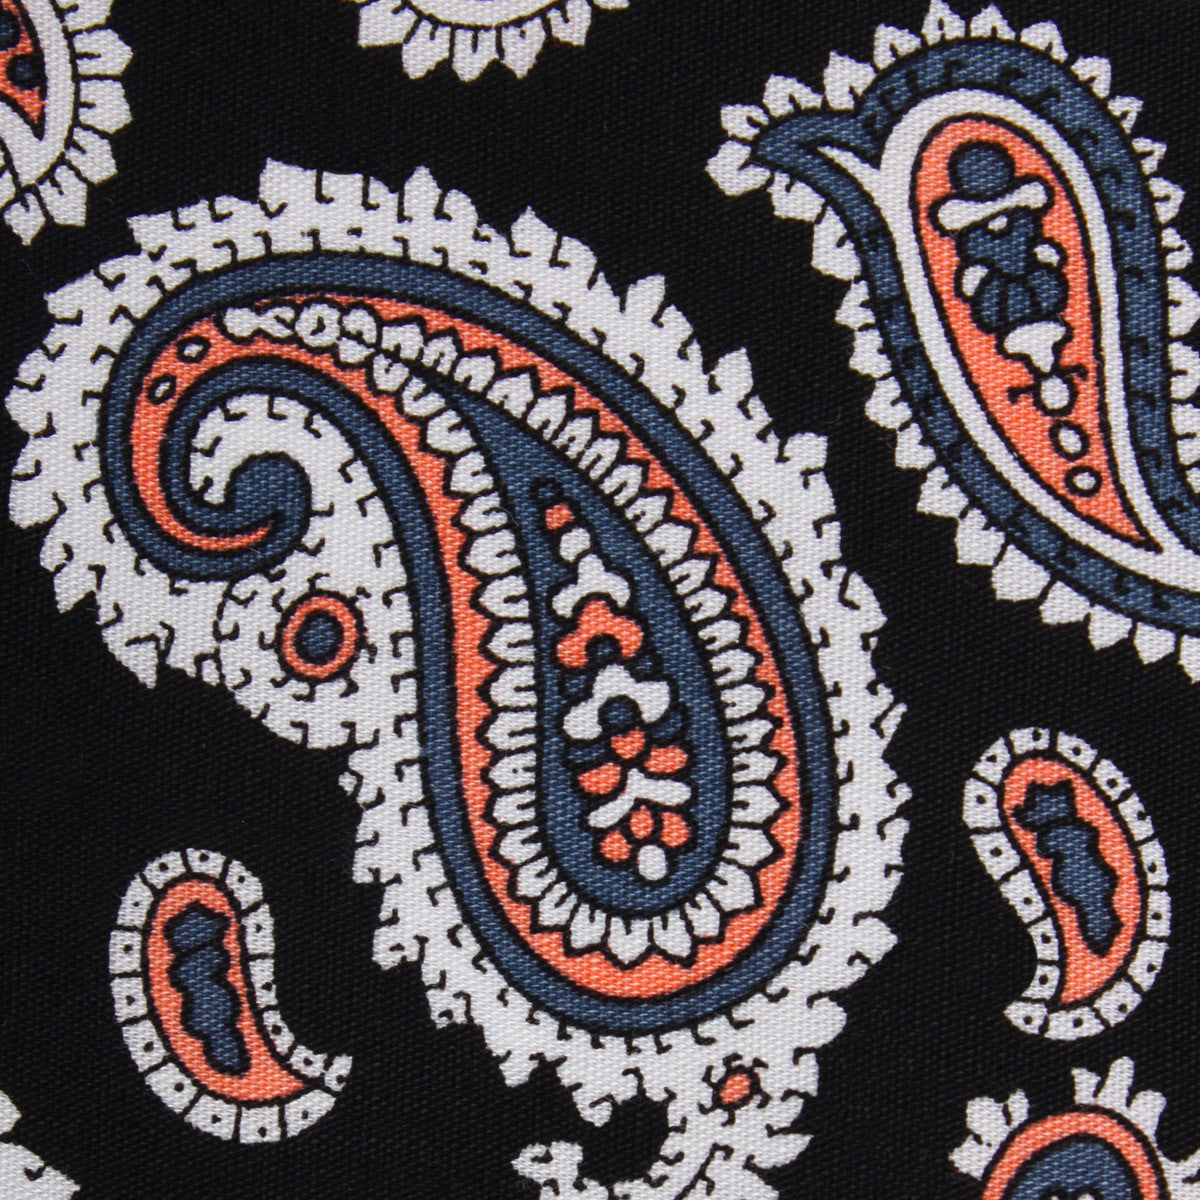 Levanzo Coral Paisley Tie | Black Pattern Ties | Mens Designer Necktie ...